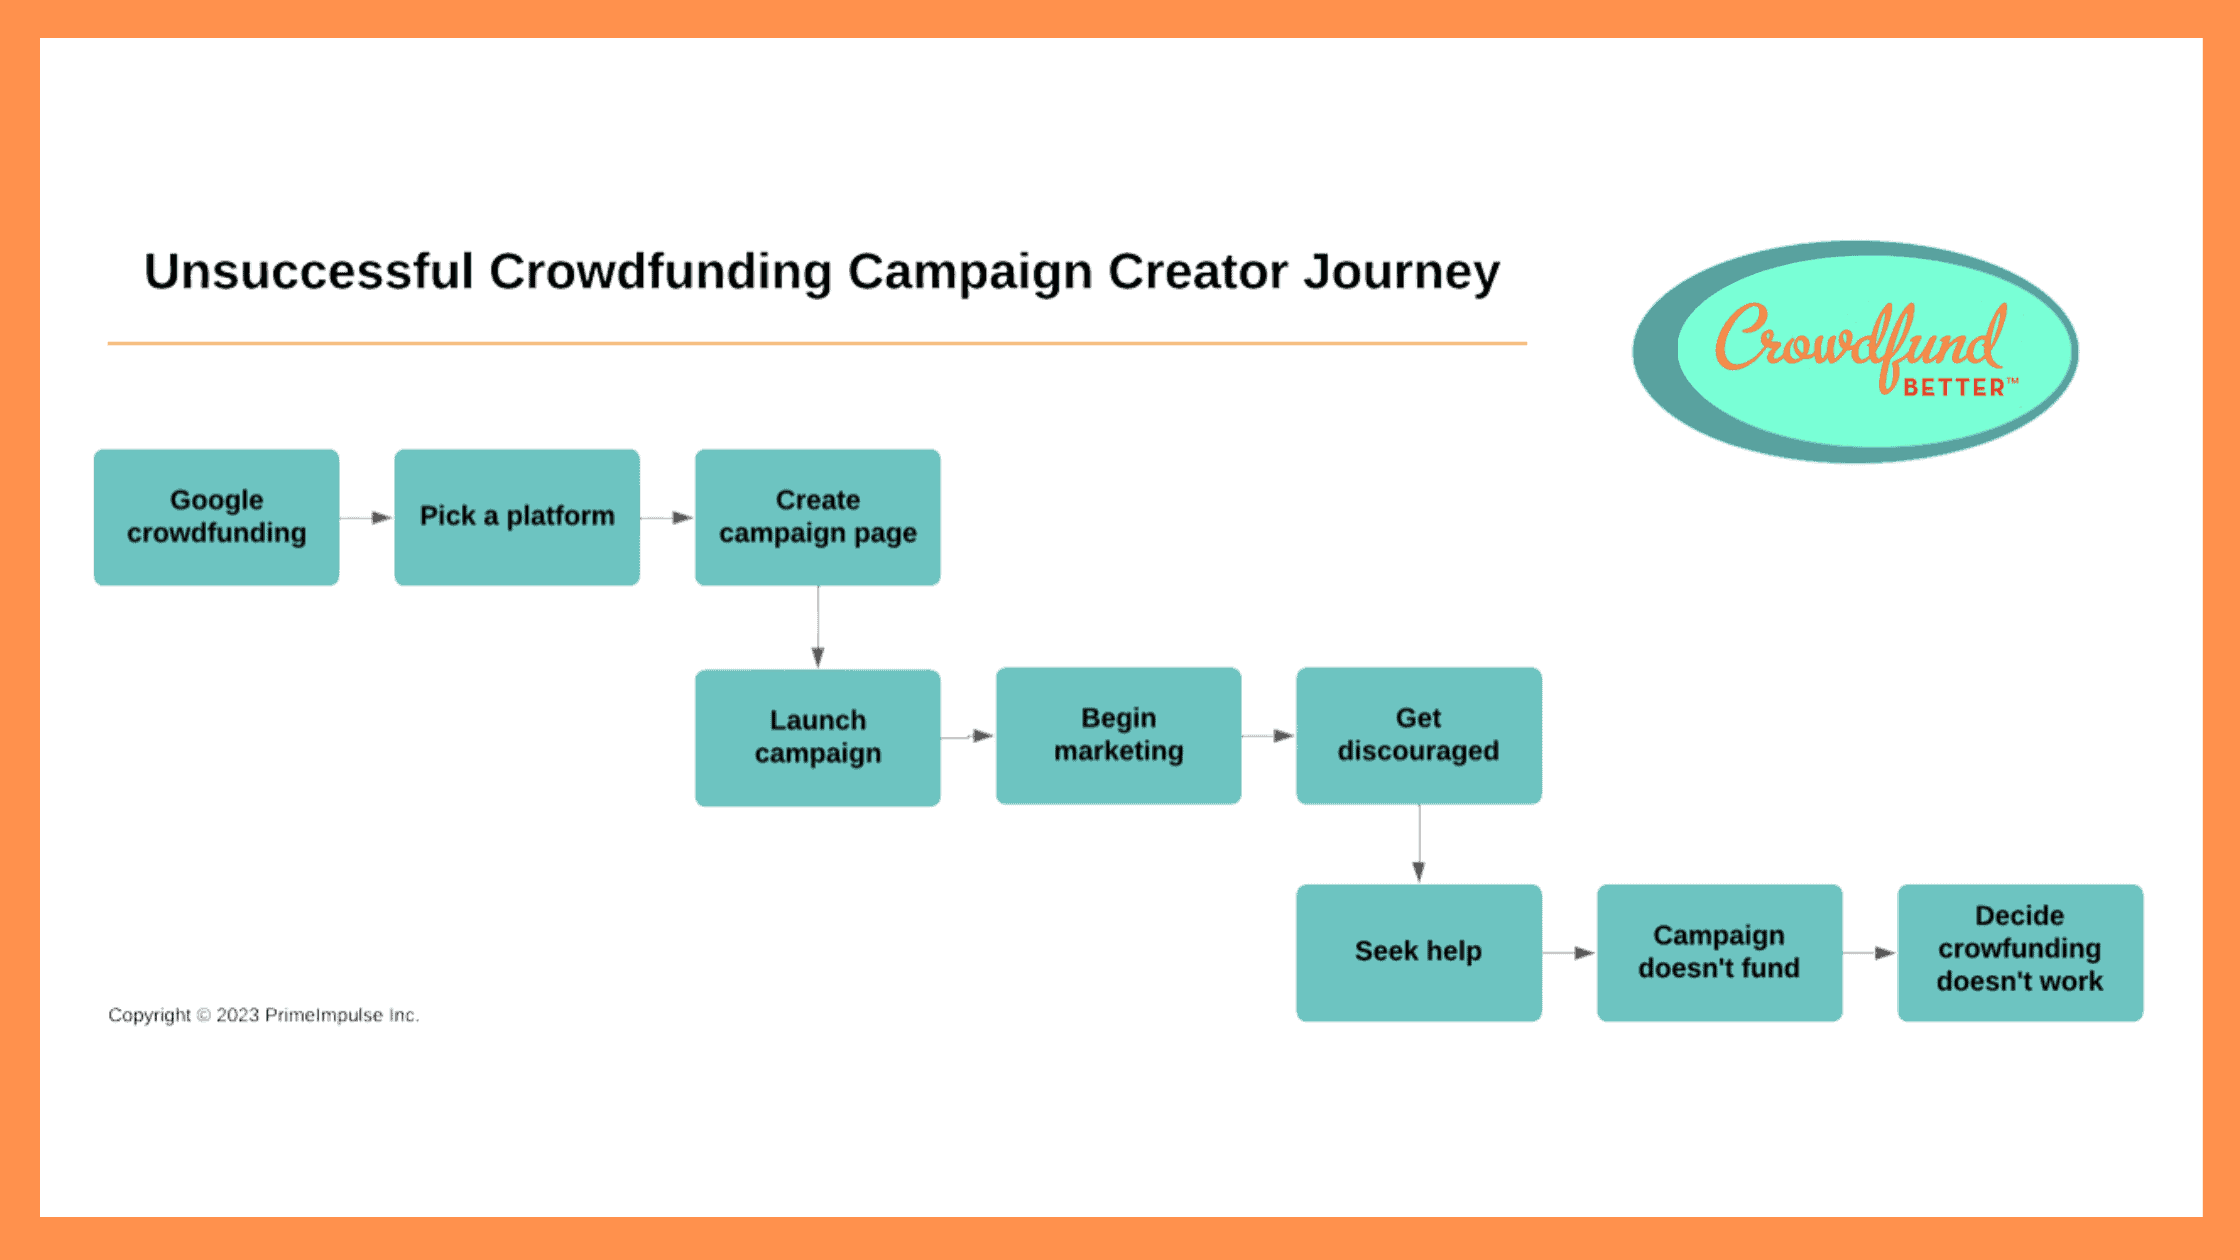 unsuccessful crowdfunding campaign creator journey graphic, Crowdfund Better